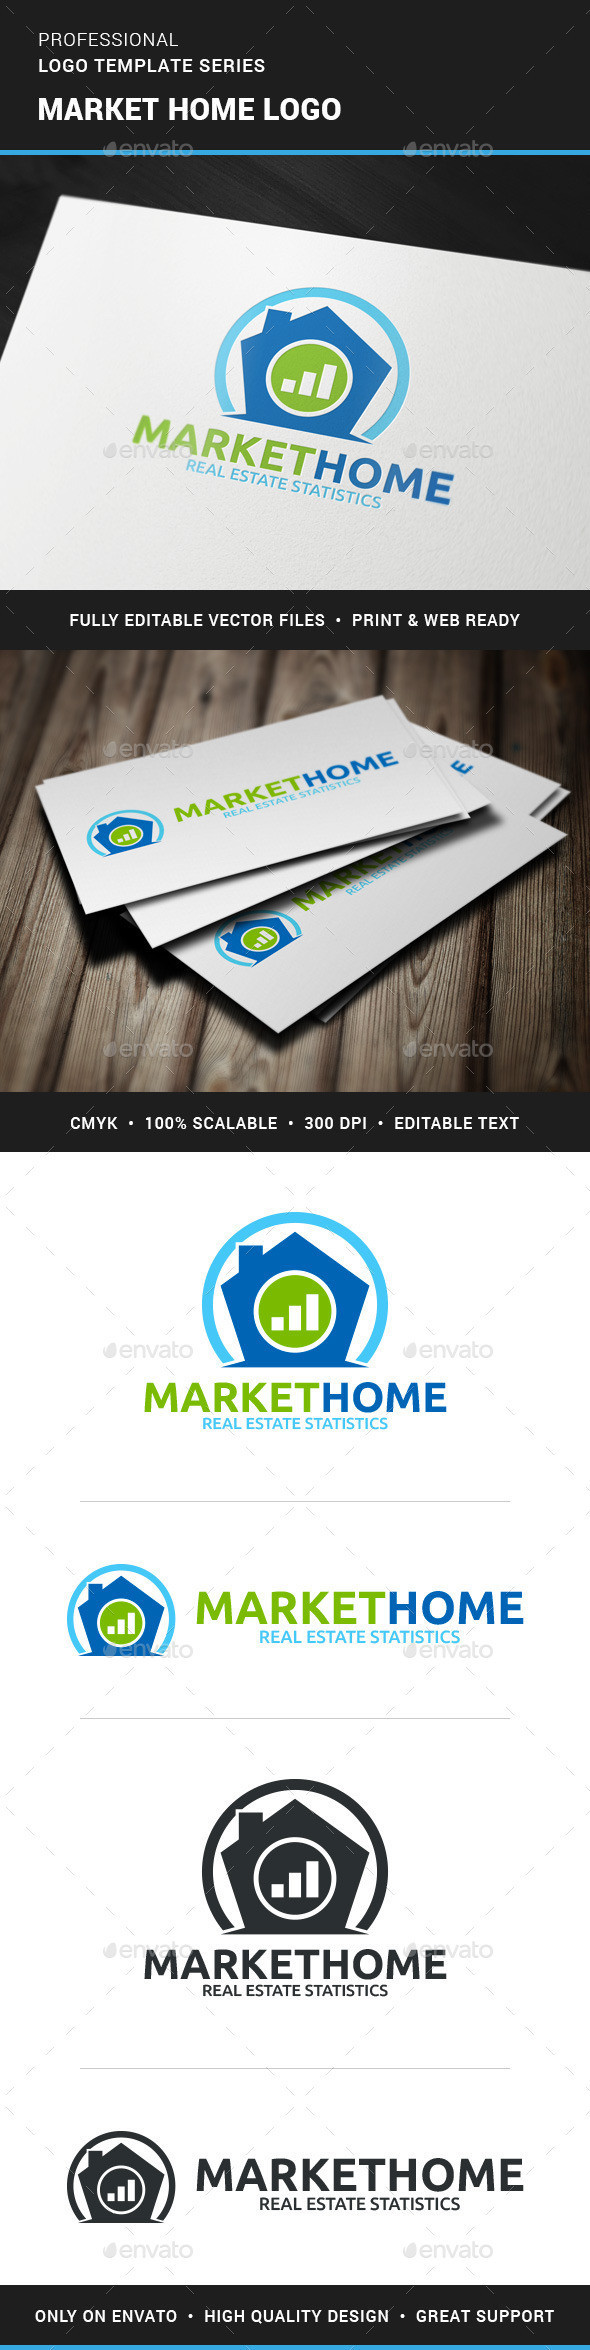 Market home logo template